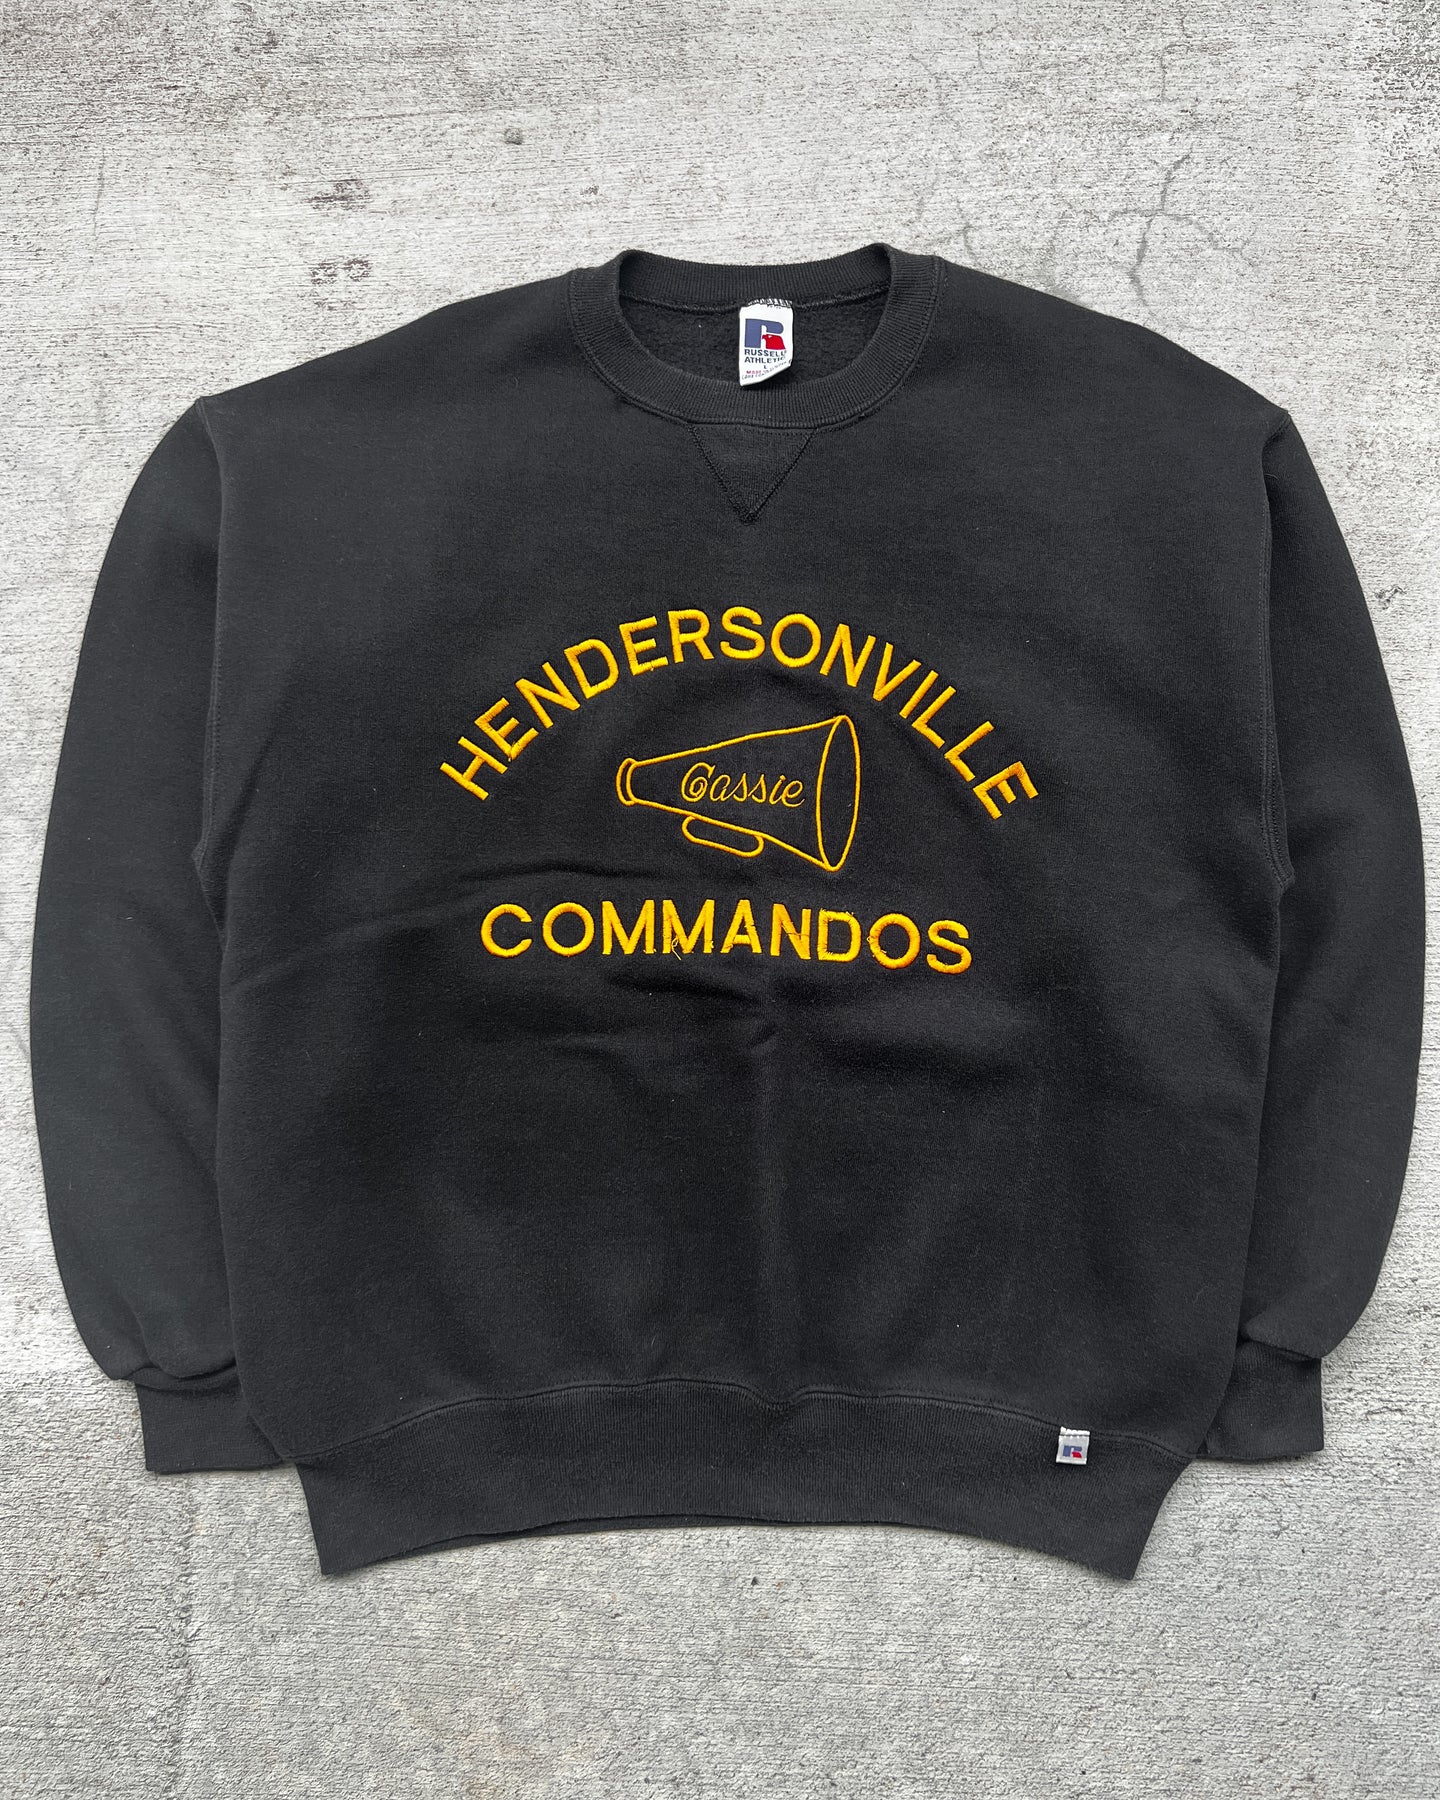 1990s Russell Athletic Hendersonville Crewneck Sweatshirt - Size X-Large